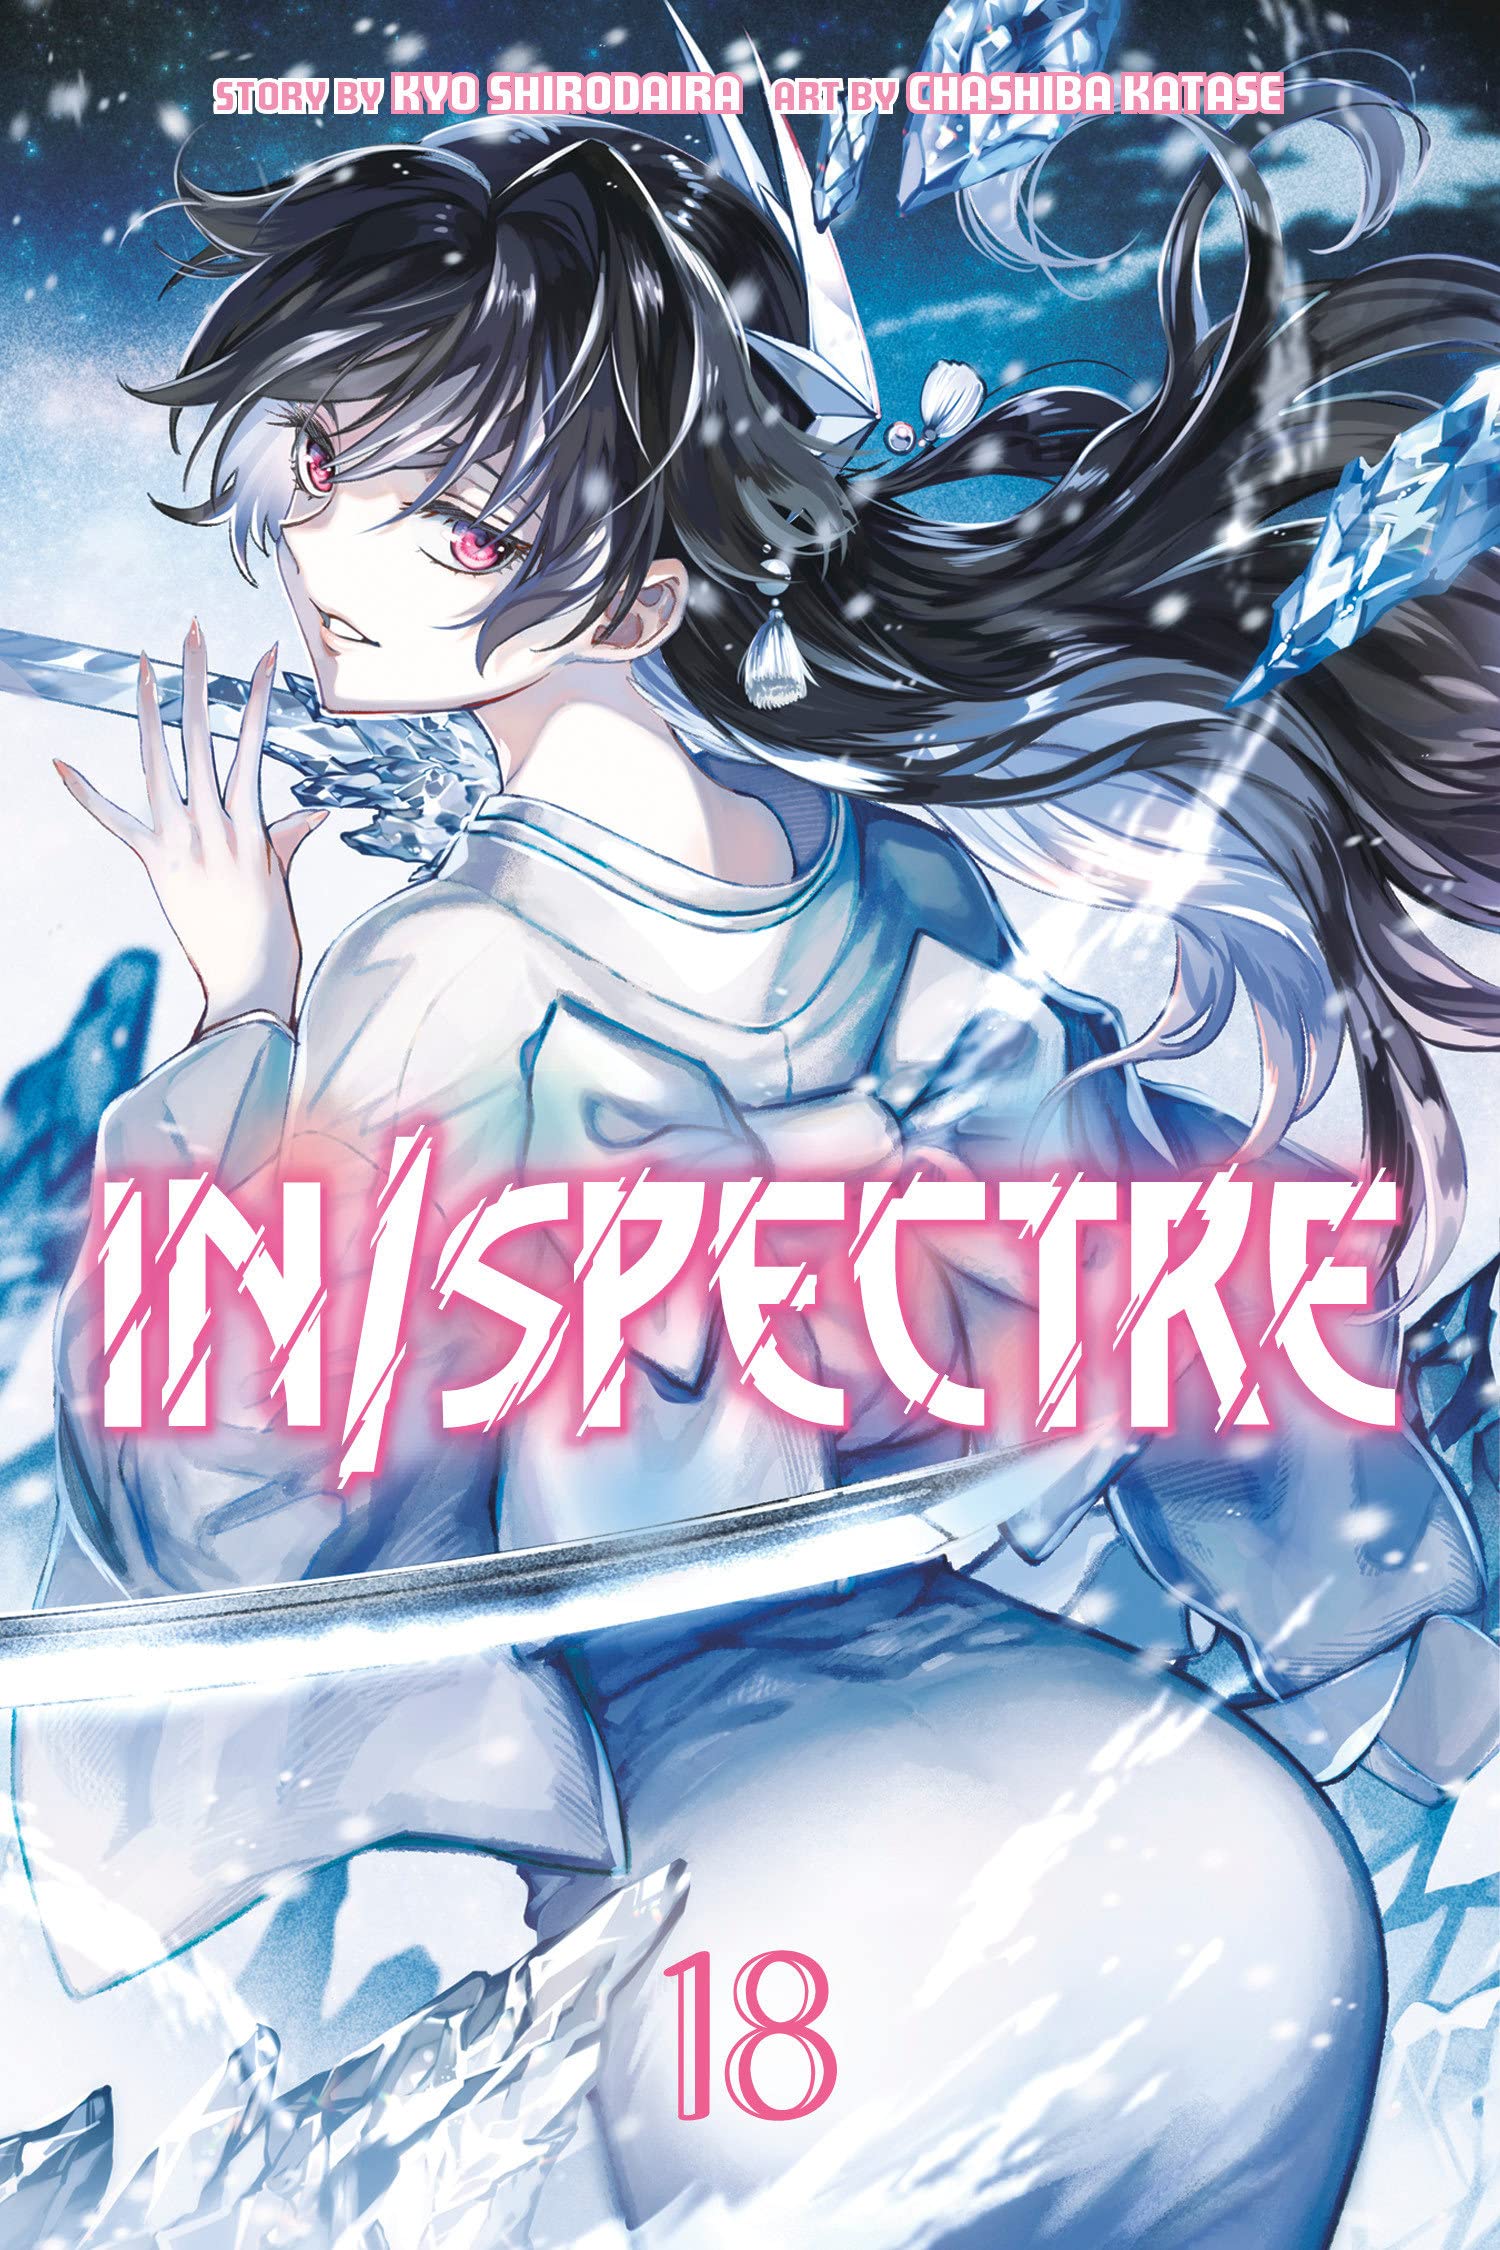 In/Spectre Vol. 18